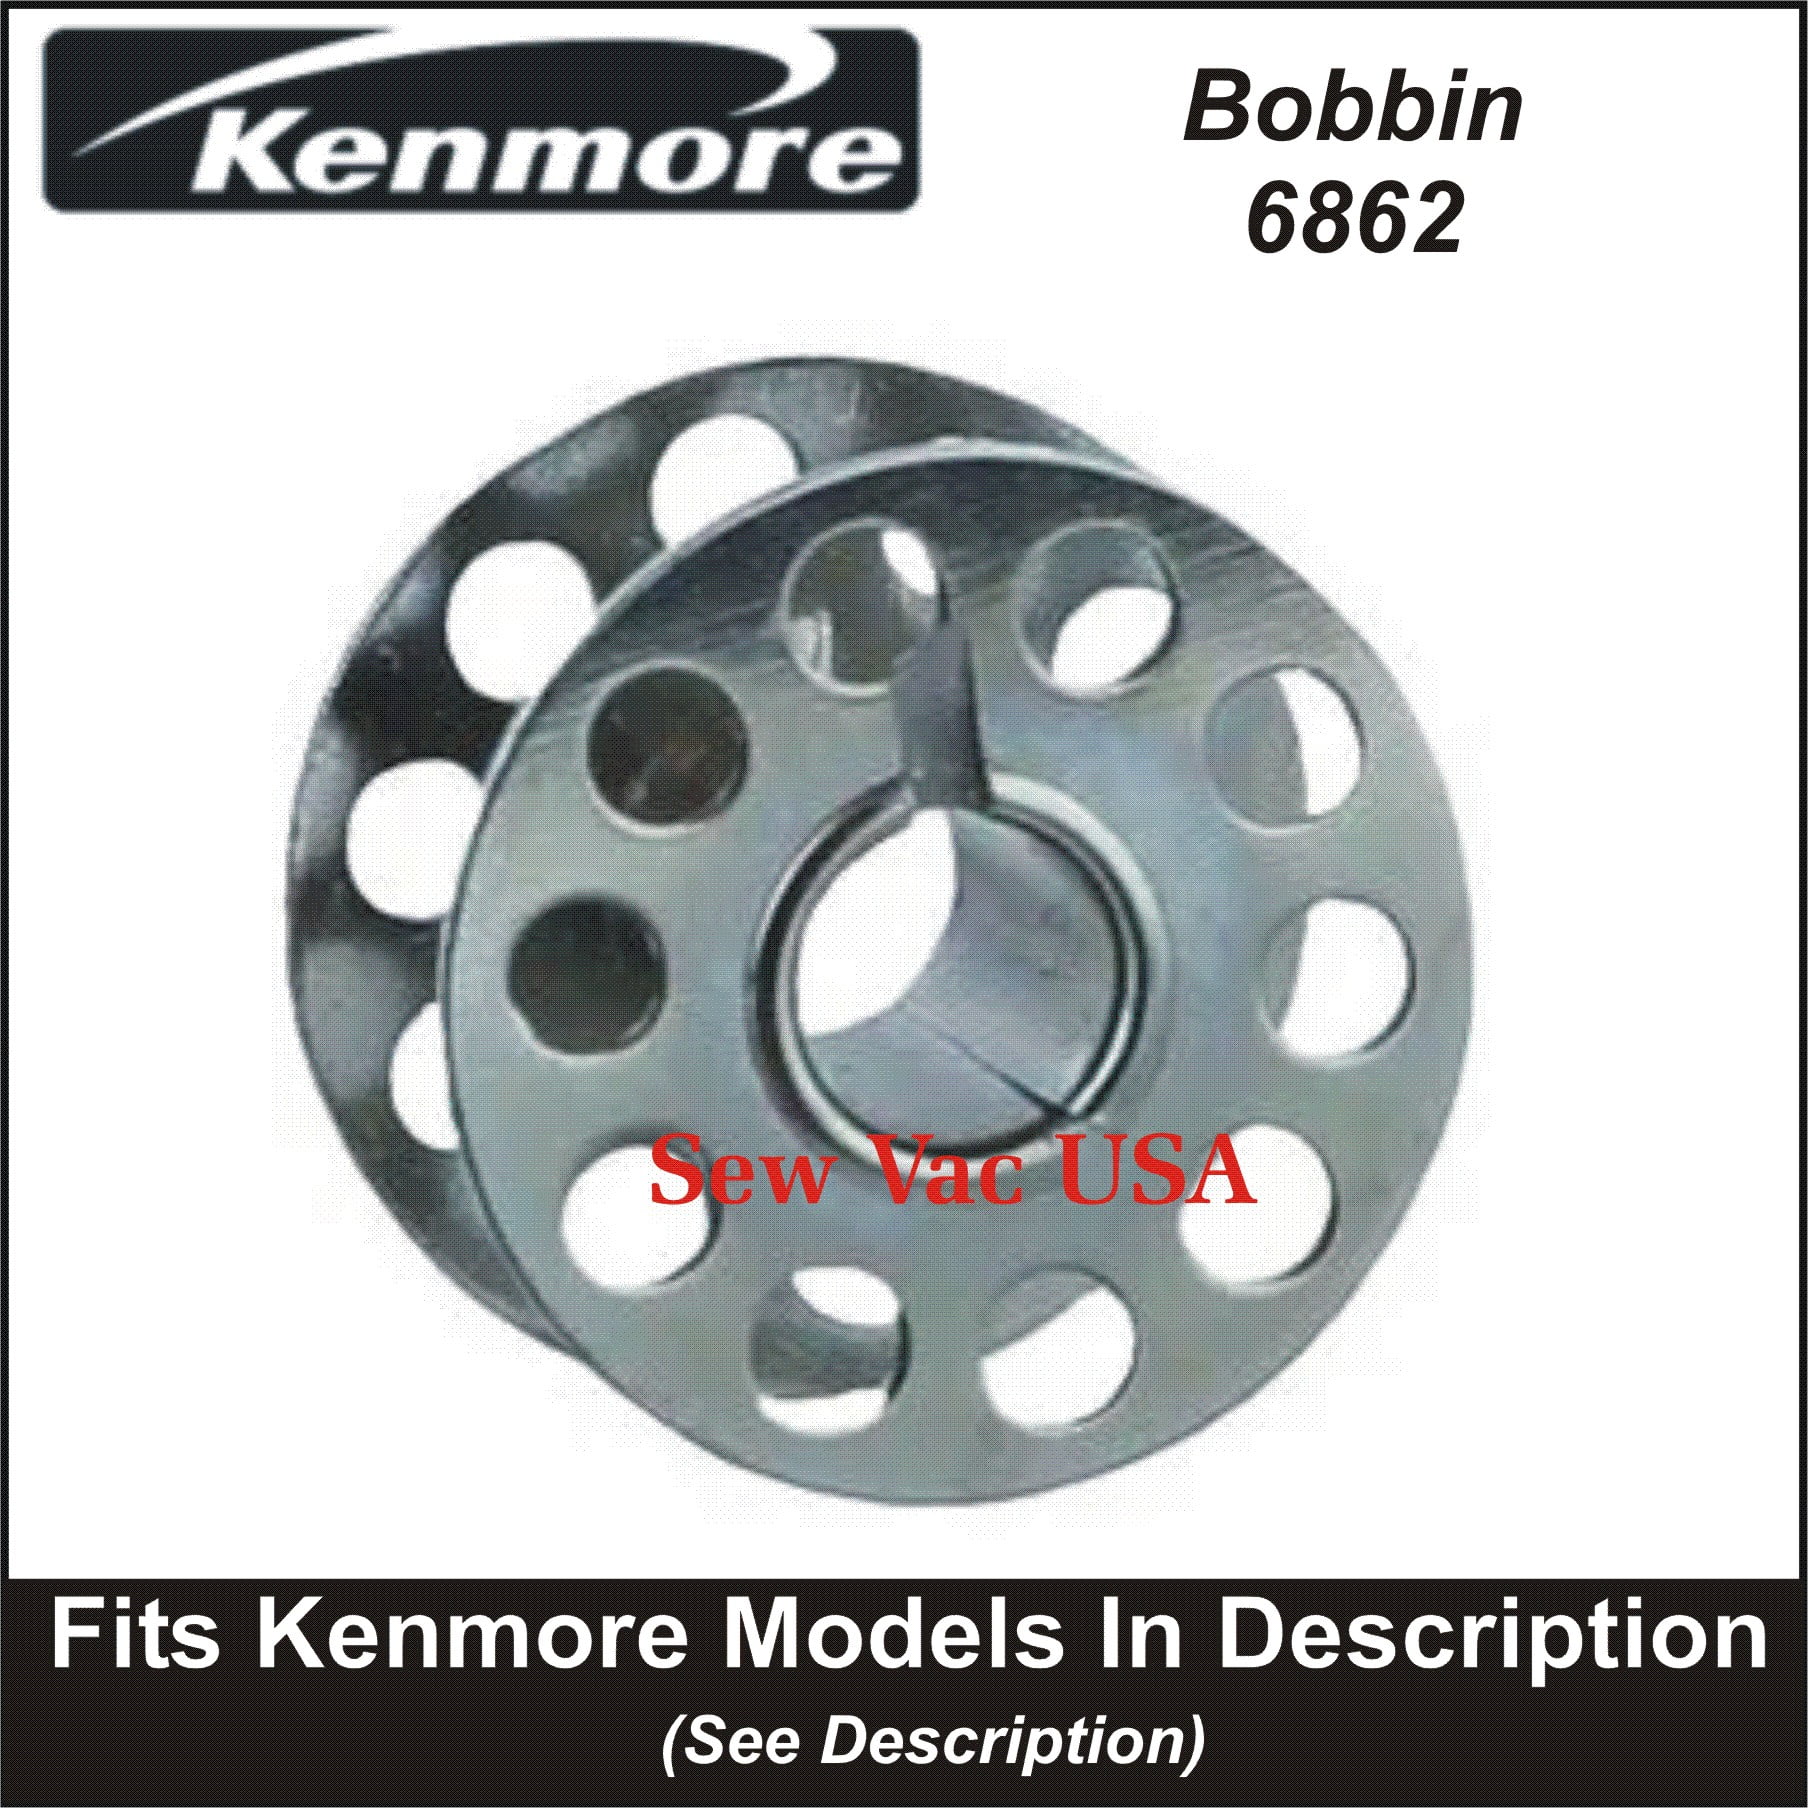 10pk Fits Rotary Models In Description Kenmore Bobbins 744